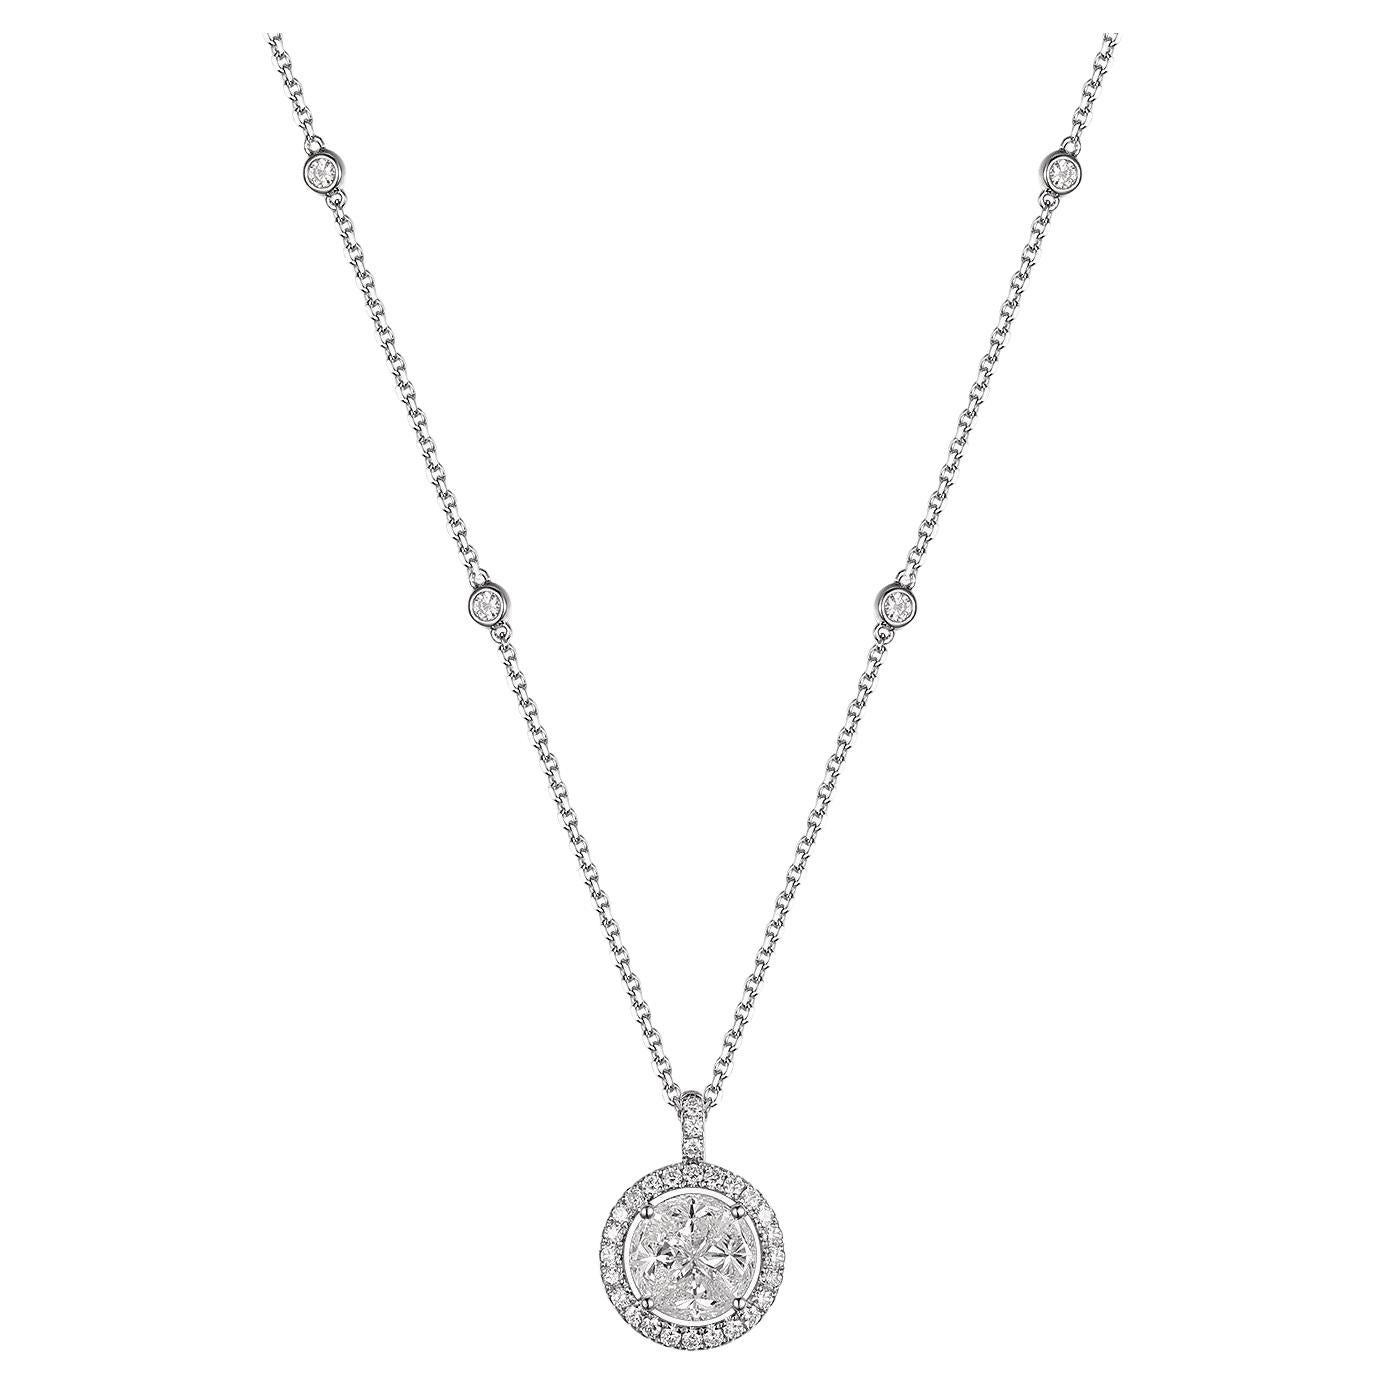 IGI Certifiled 1.57Carat Diamond Necklace in 18 Karat White Gold For Sale